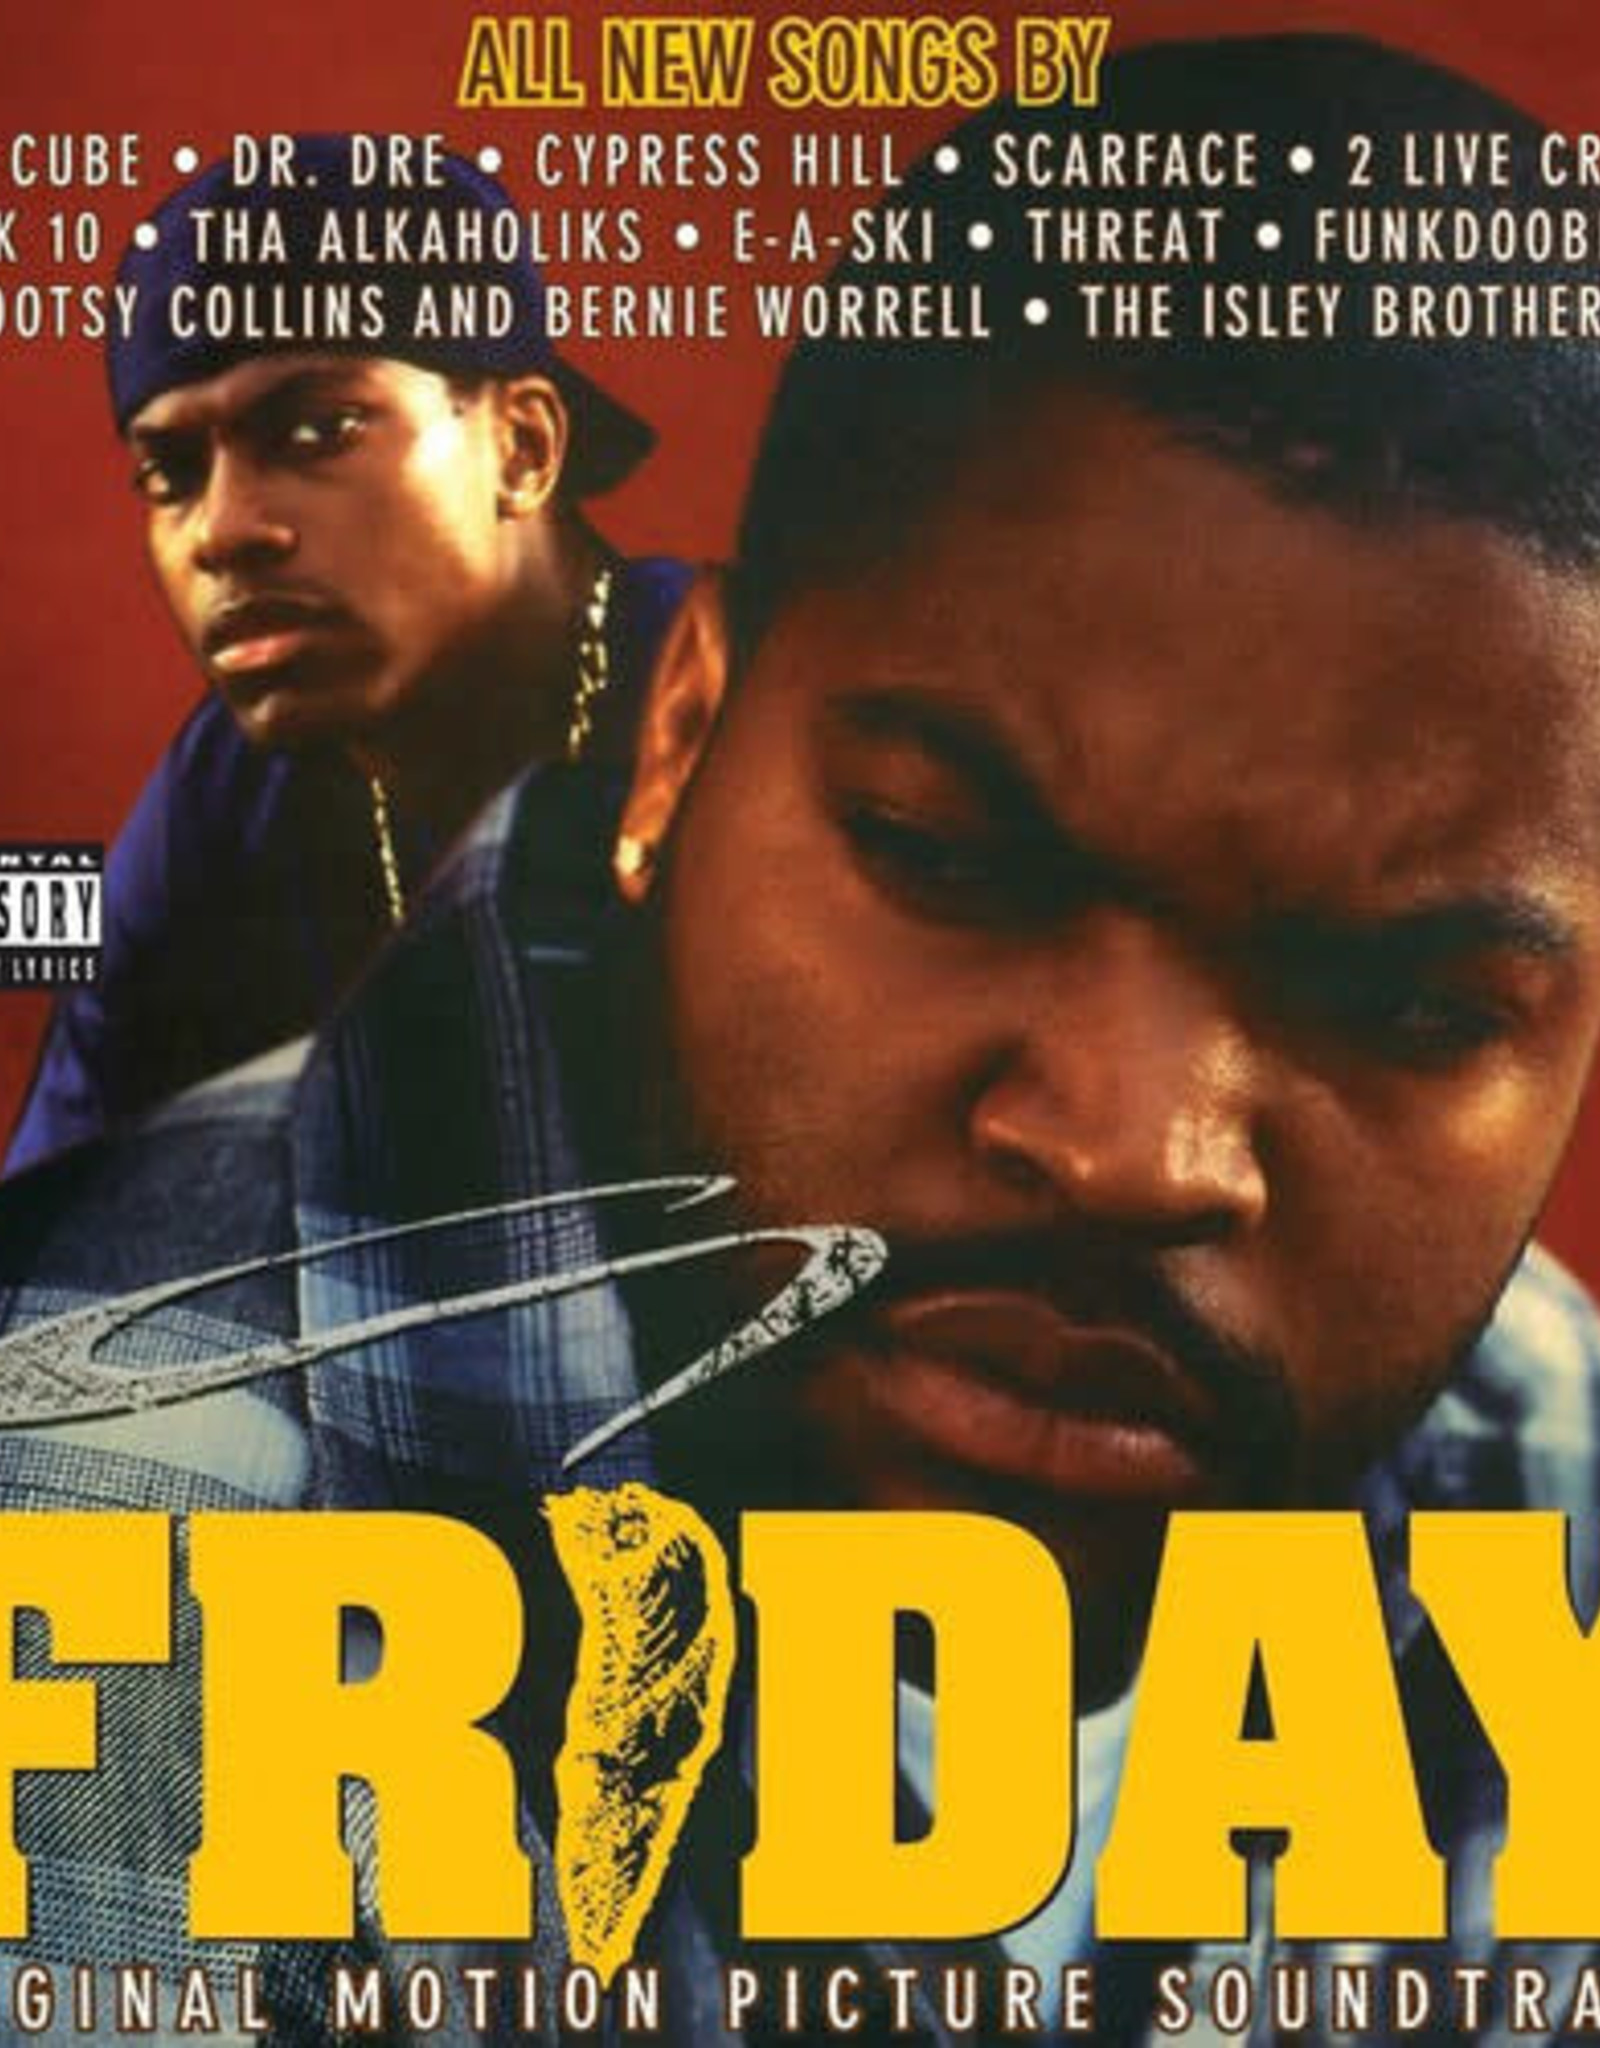 Friday (Original Motion Picture Soundtrack)